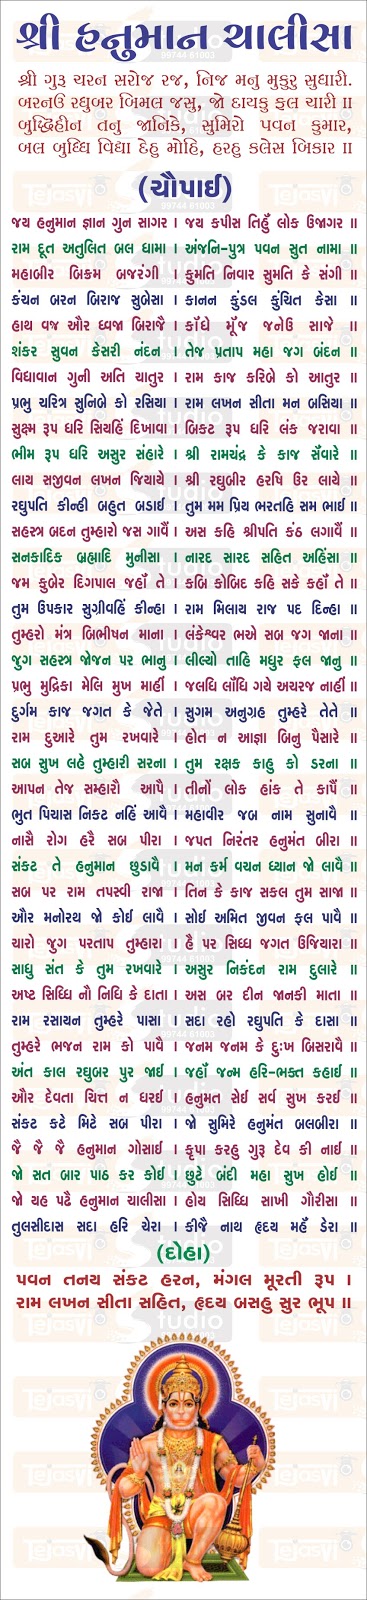 hanuman chalisa in gujarati pdf download